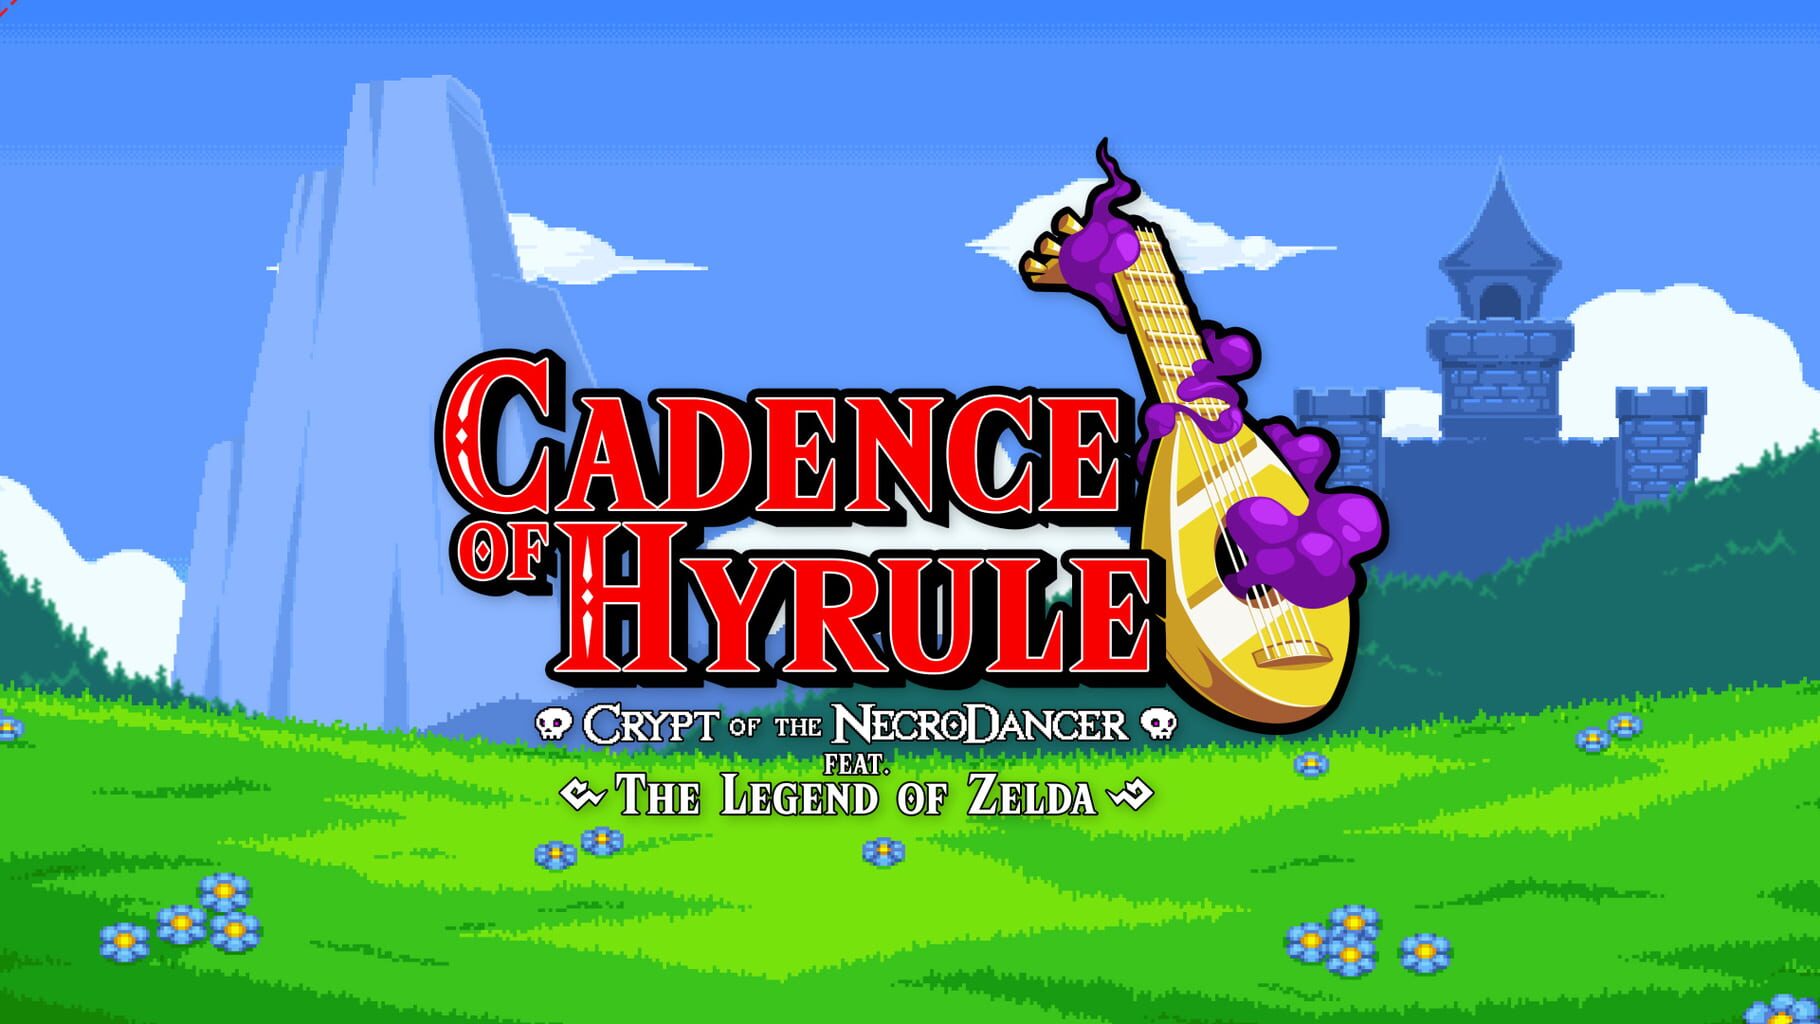 Cadence of Hyrule: Crypt of the NecroDancer Featuring the Legend of Zelda artwork